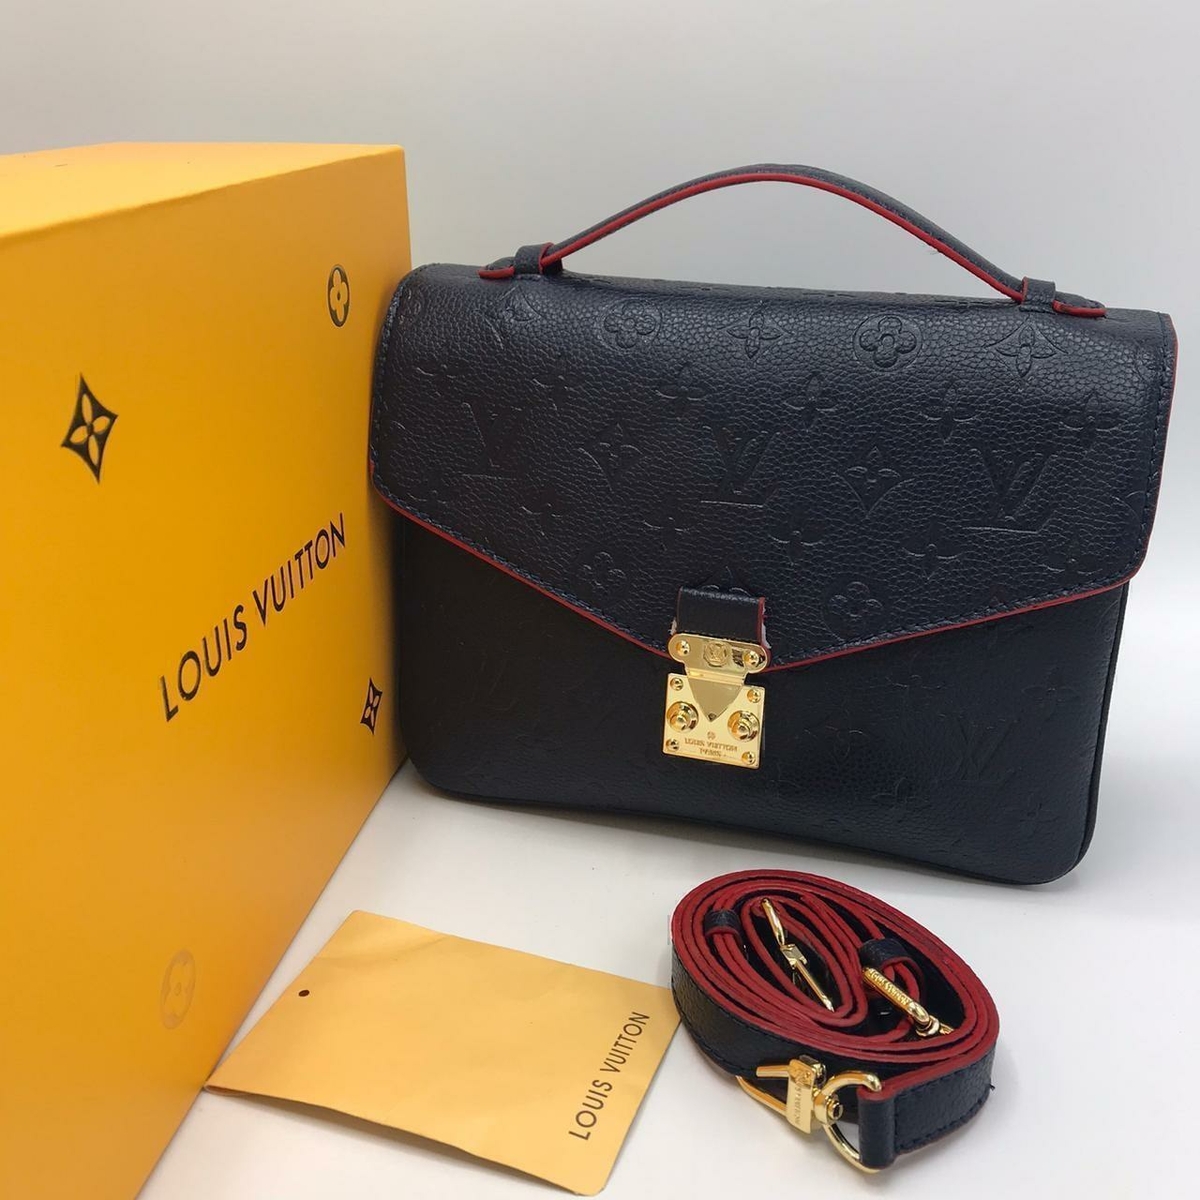 Louis Vuitton сумка #1 в «Globestyle» арт.2801MP